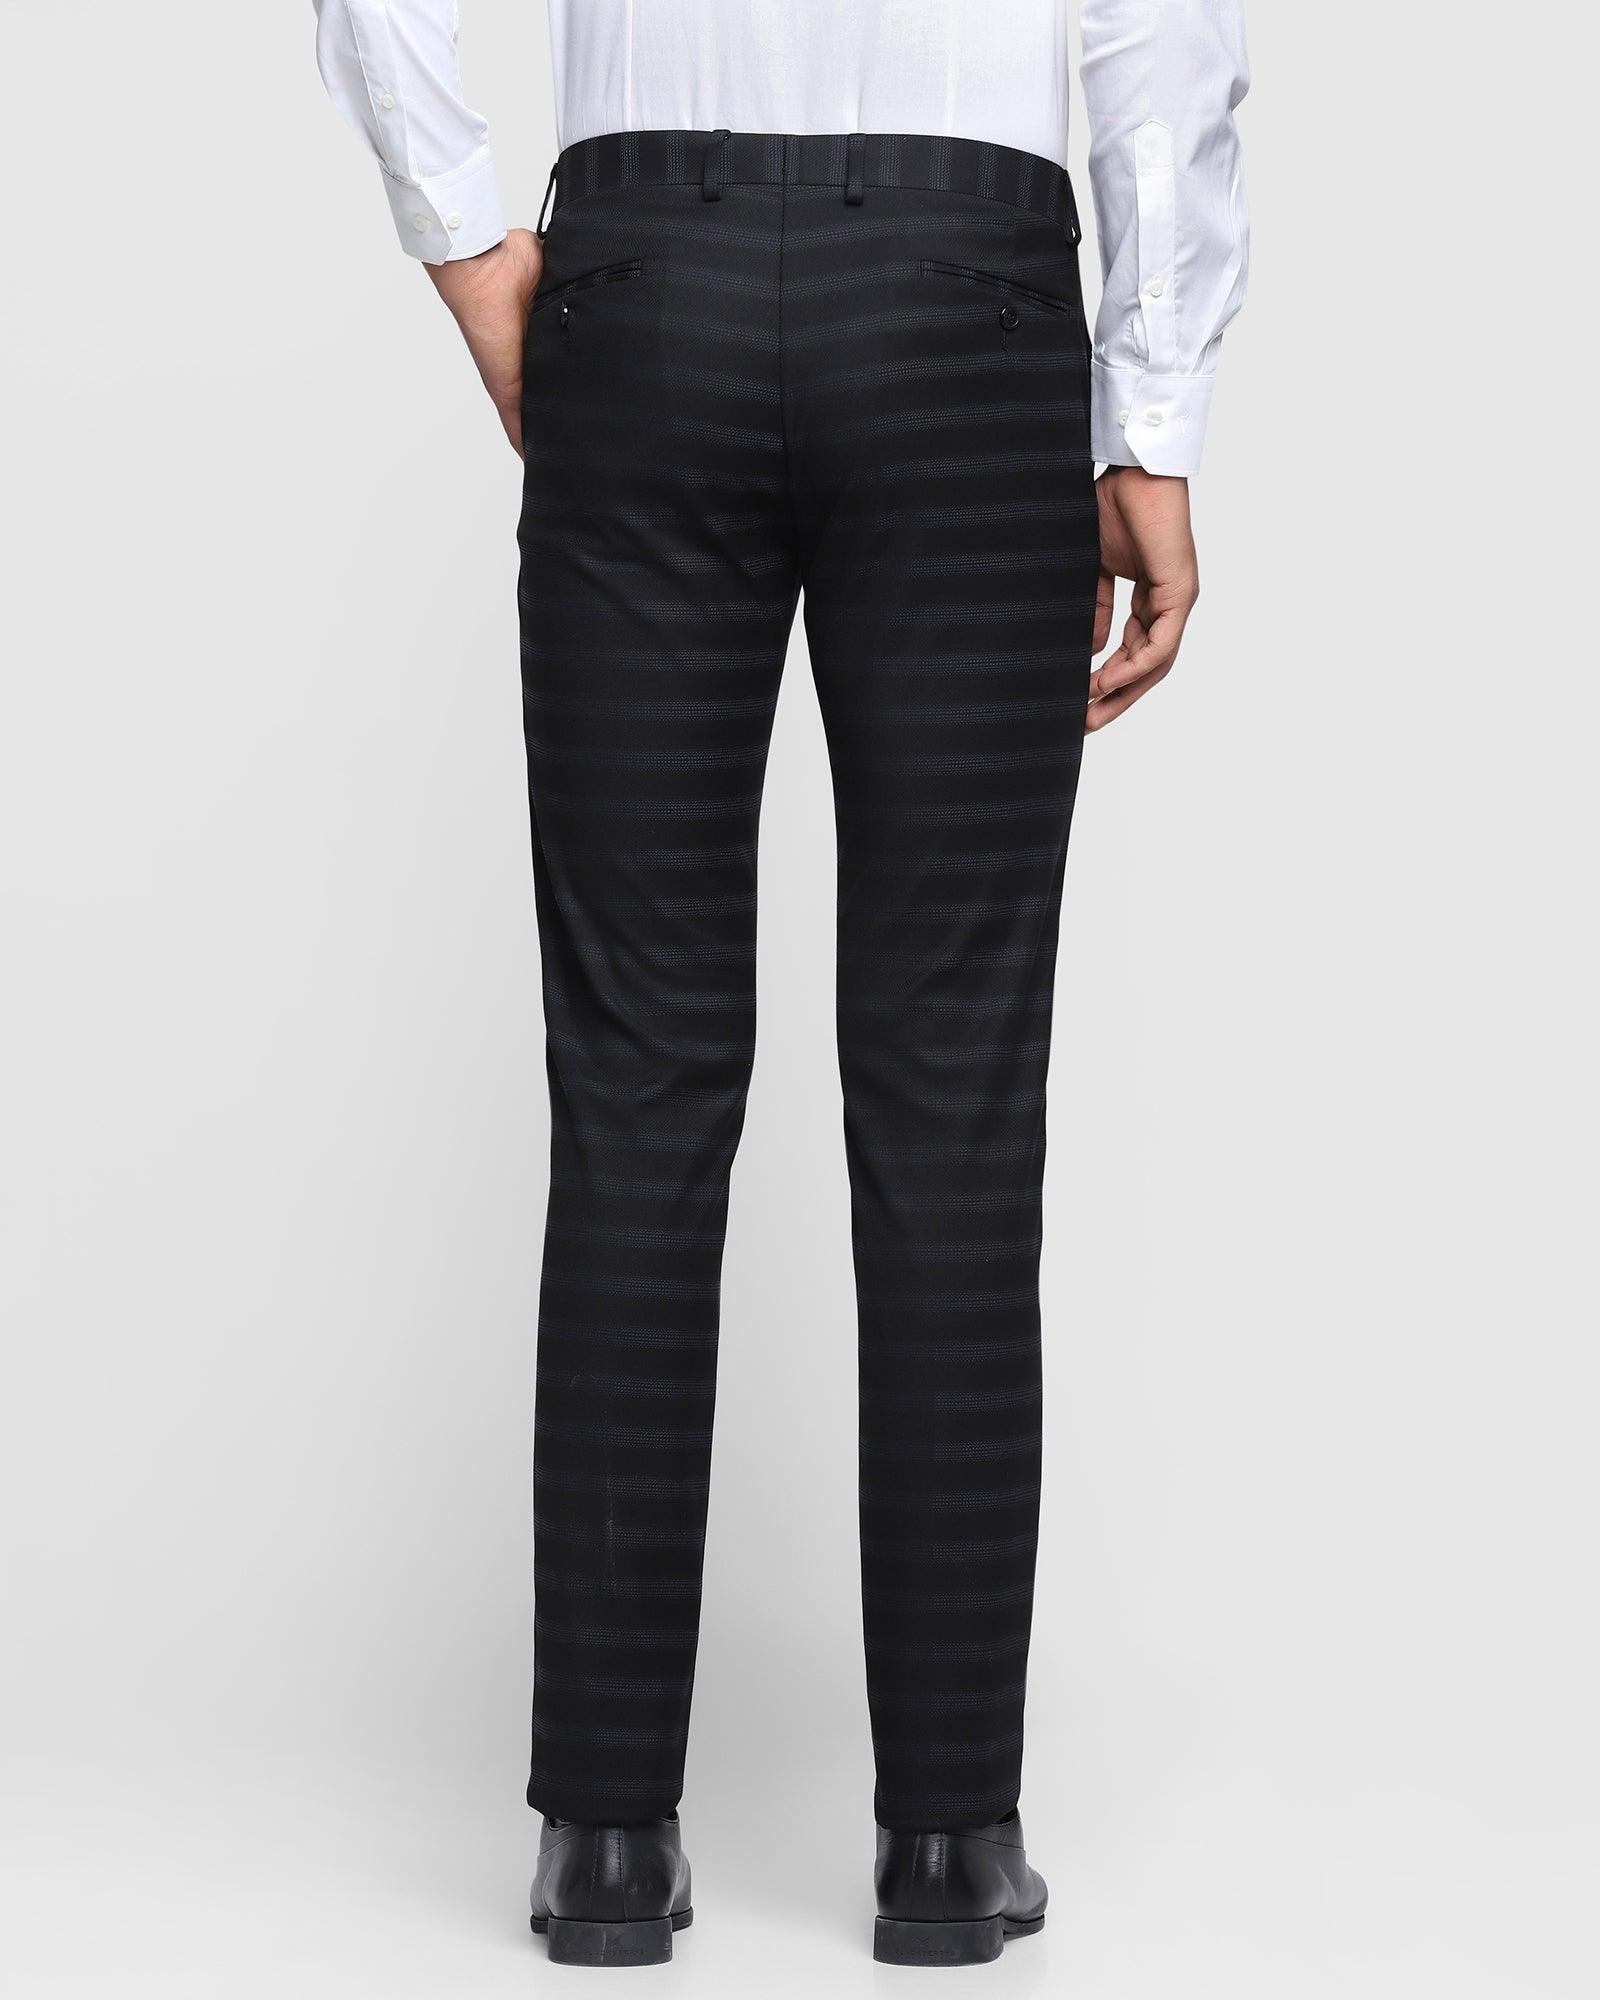 Slim Fit B-91 Formal Black Striped Trouser - Modek